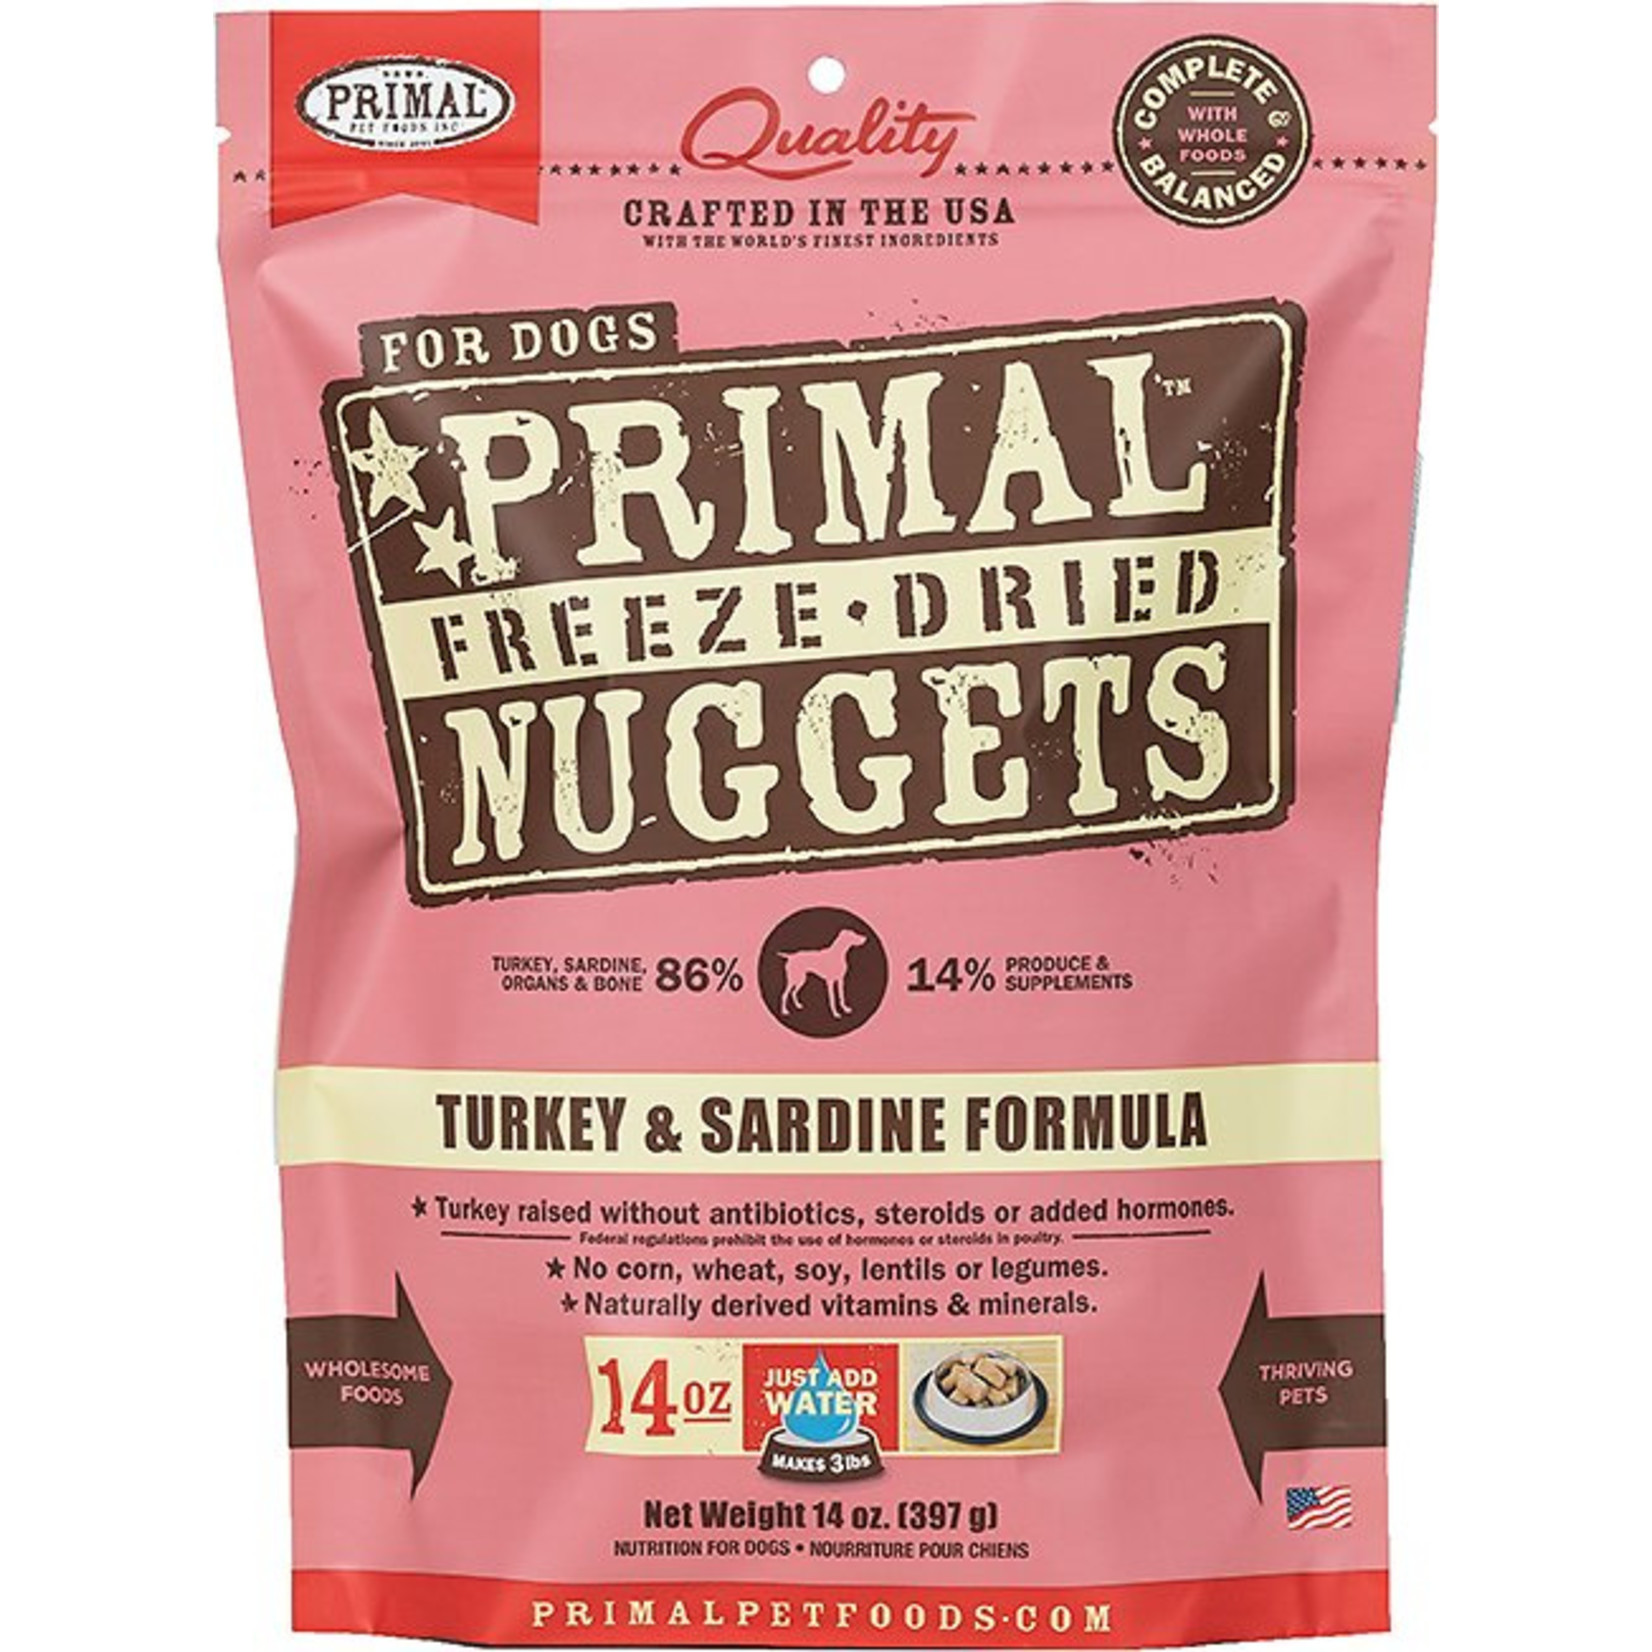 Primal Pet Foods Primal Freeze-Dried Nuggets - Turkey & Sardine Formula for Dogs